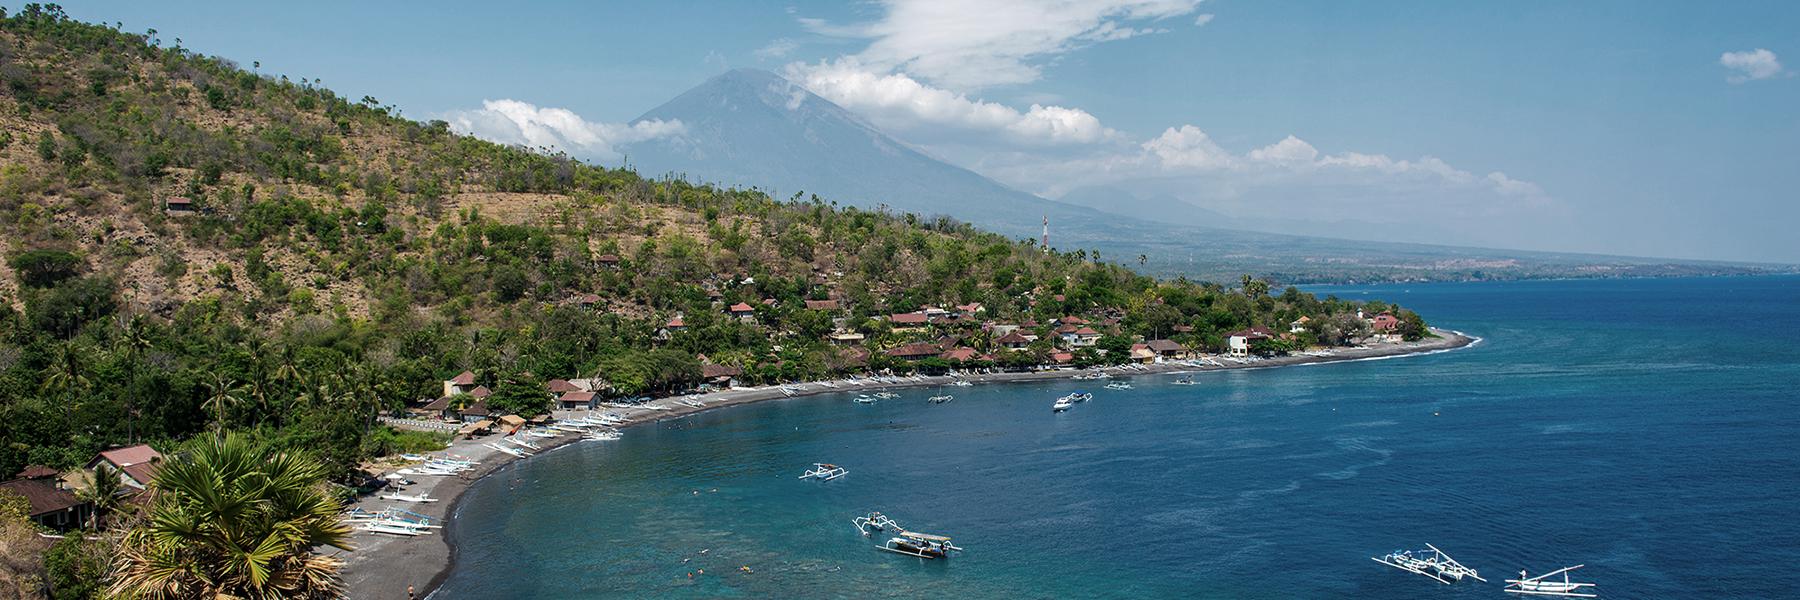 Why Visit East Bali?